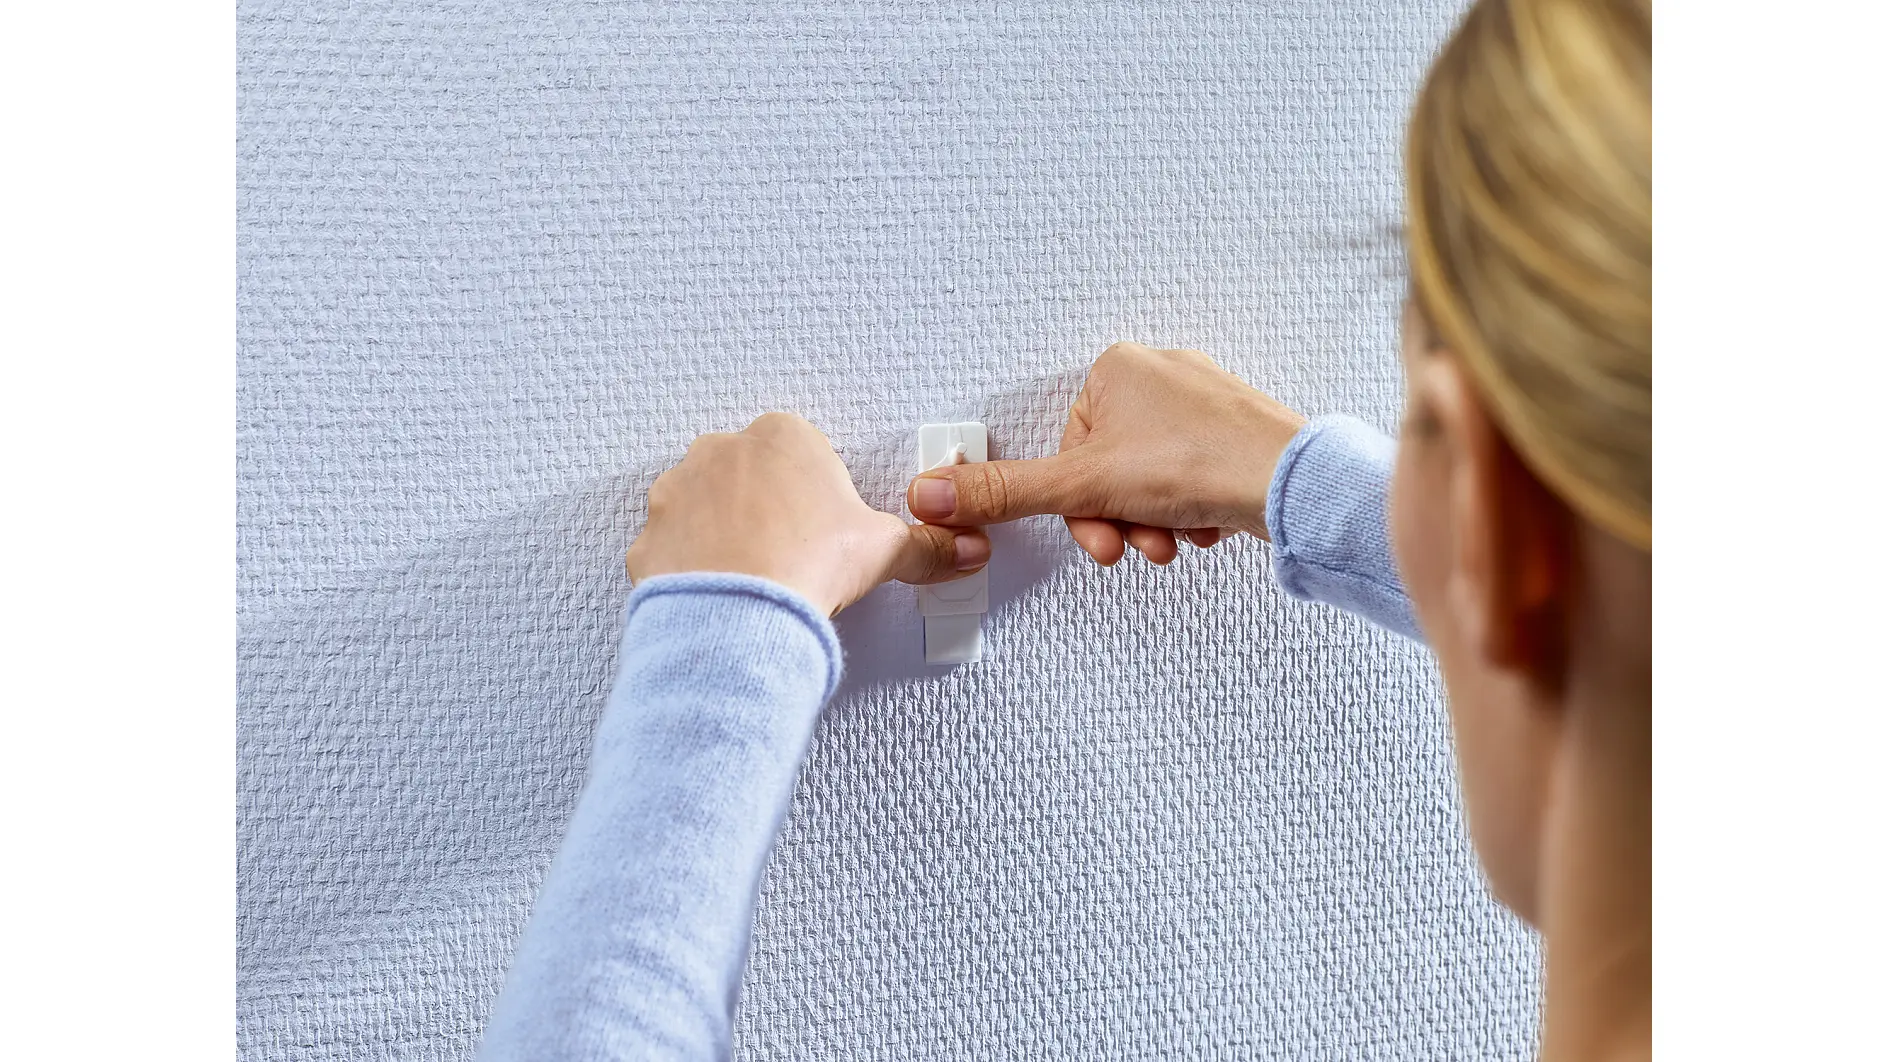 tesa Smart Mounting System Adhesive Nail 1kg Step 8 of 11 wallpaper